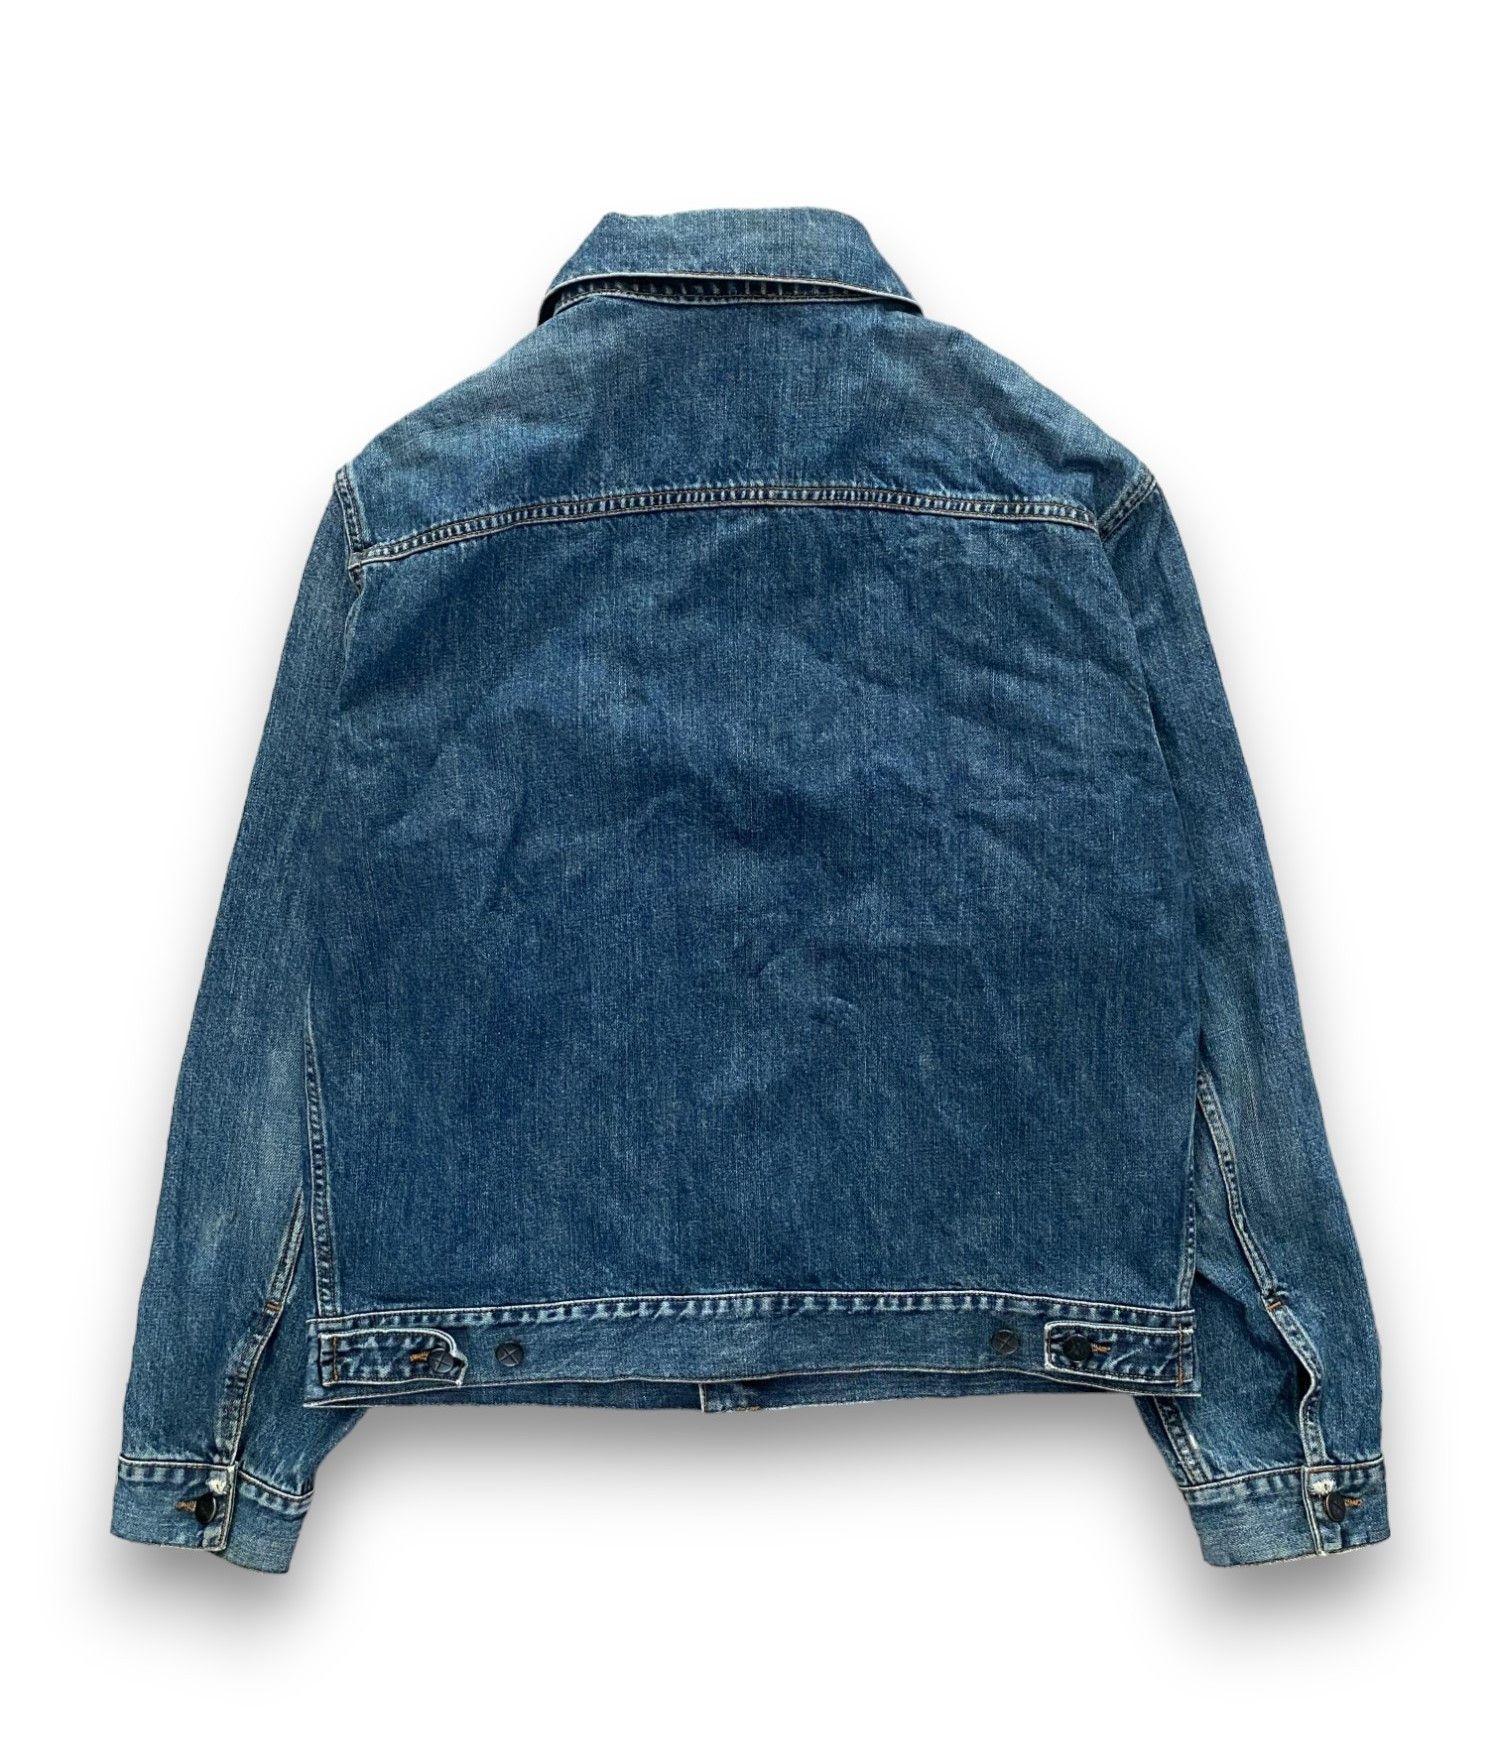 Stone Island Denim Jacket Blue Vintage Rare Men’s L - 7